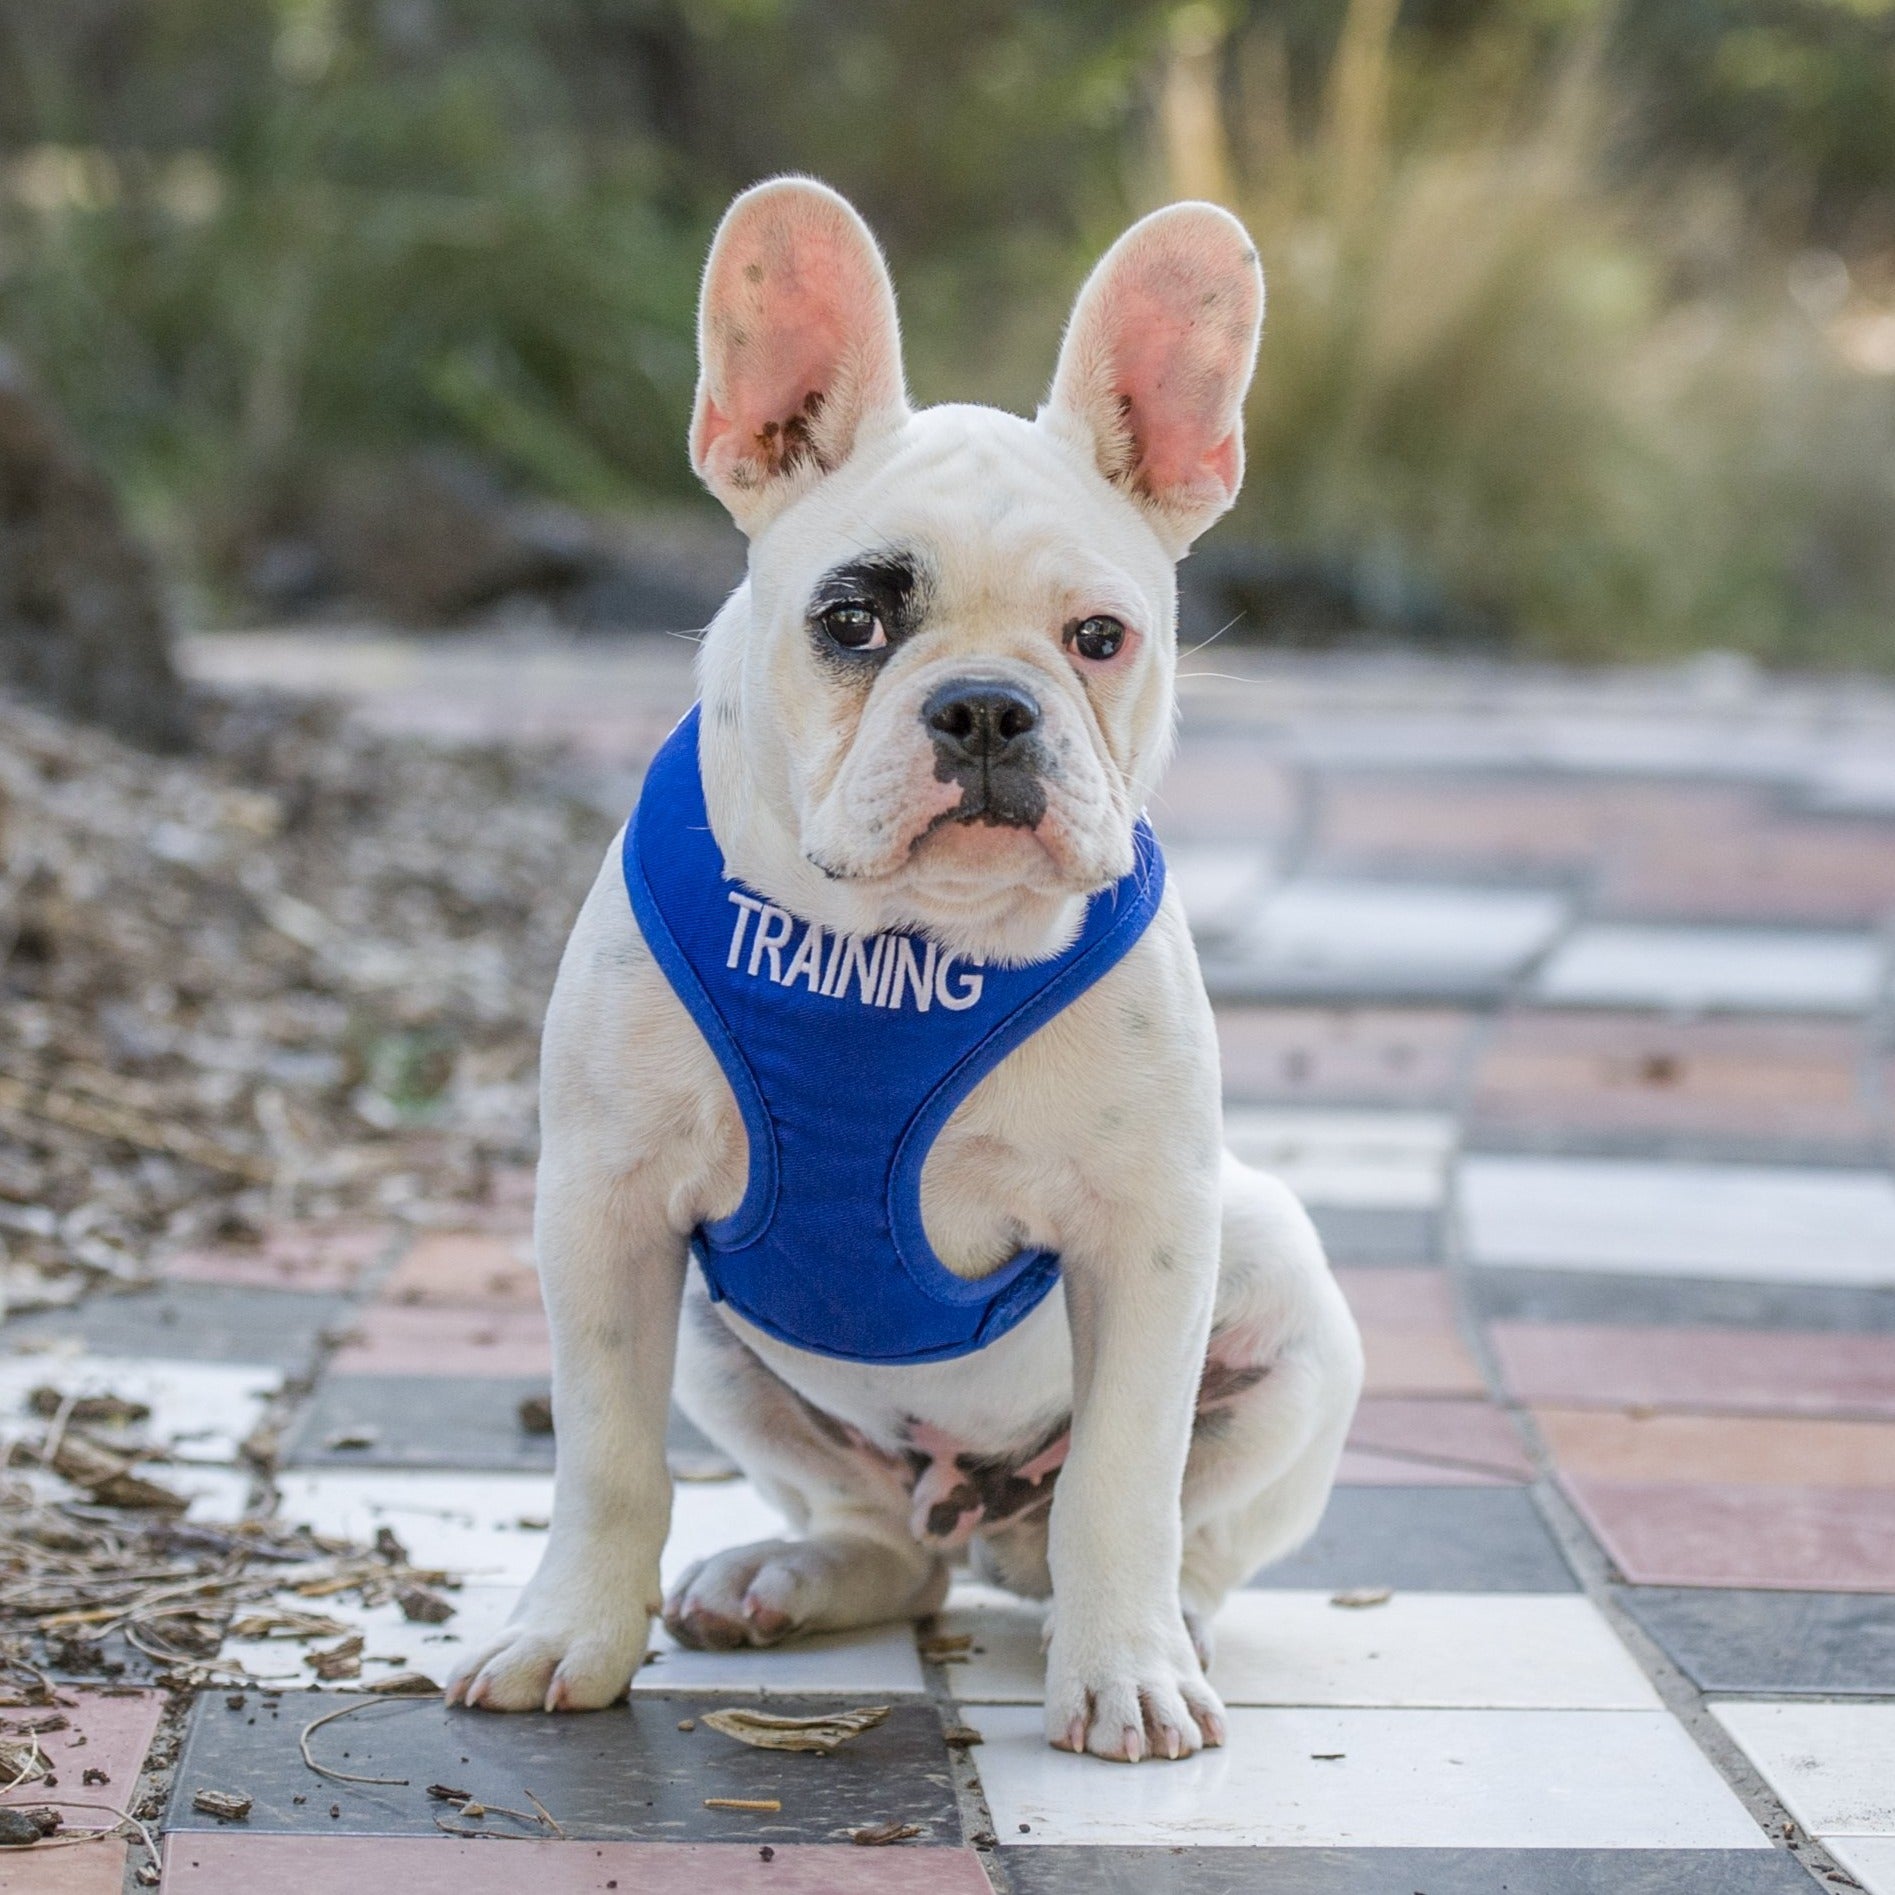 Dexil Friendly Dog Collars Blue TRAINING Small adjustable Vest Harness